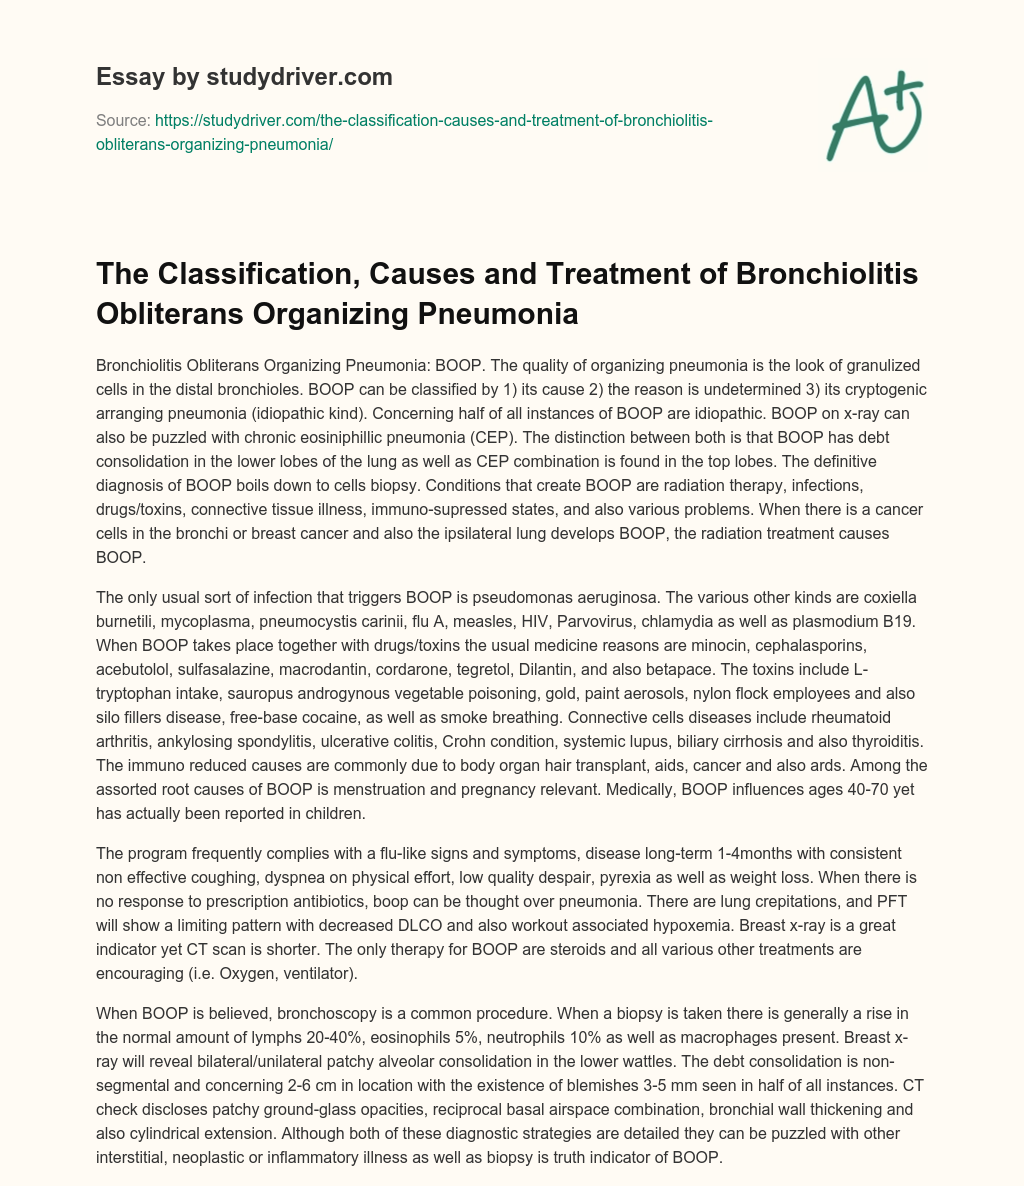 The Classification, Causes and Treatment of Bronchiolitis Obliterans Organizing Pneumonia essay